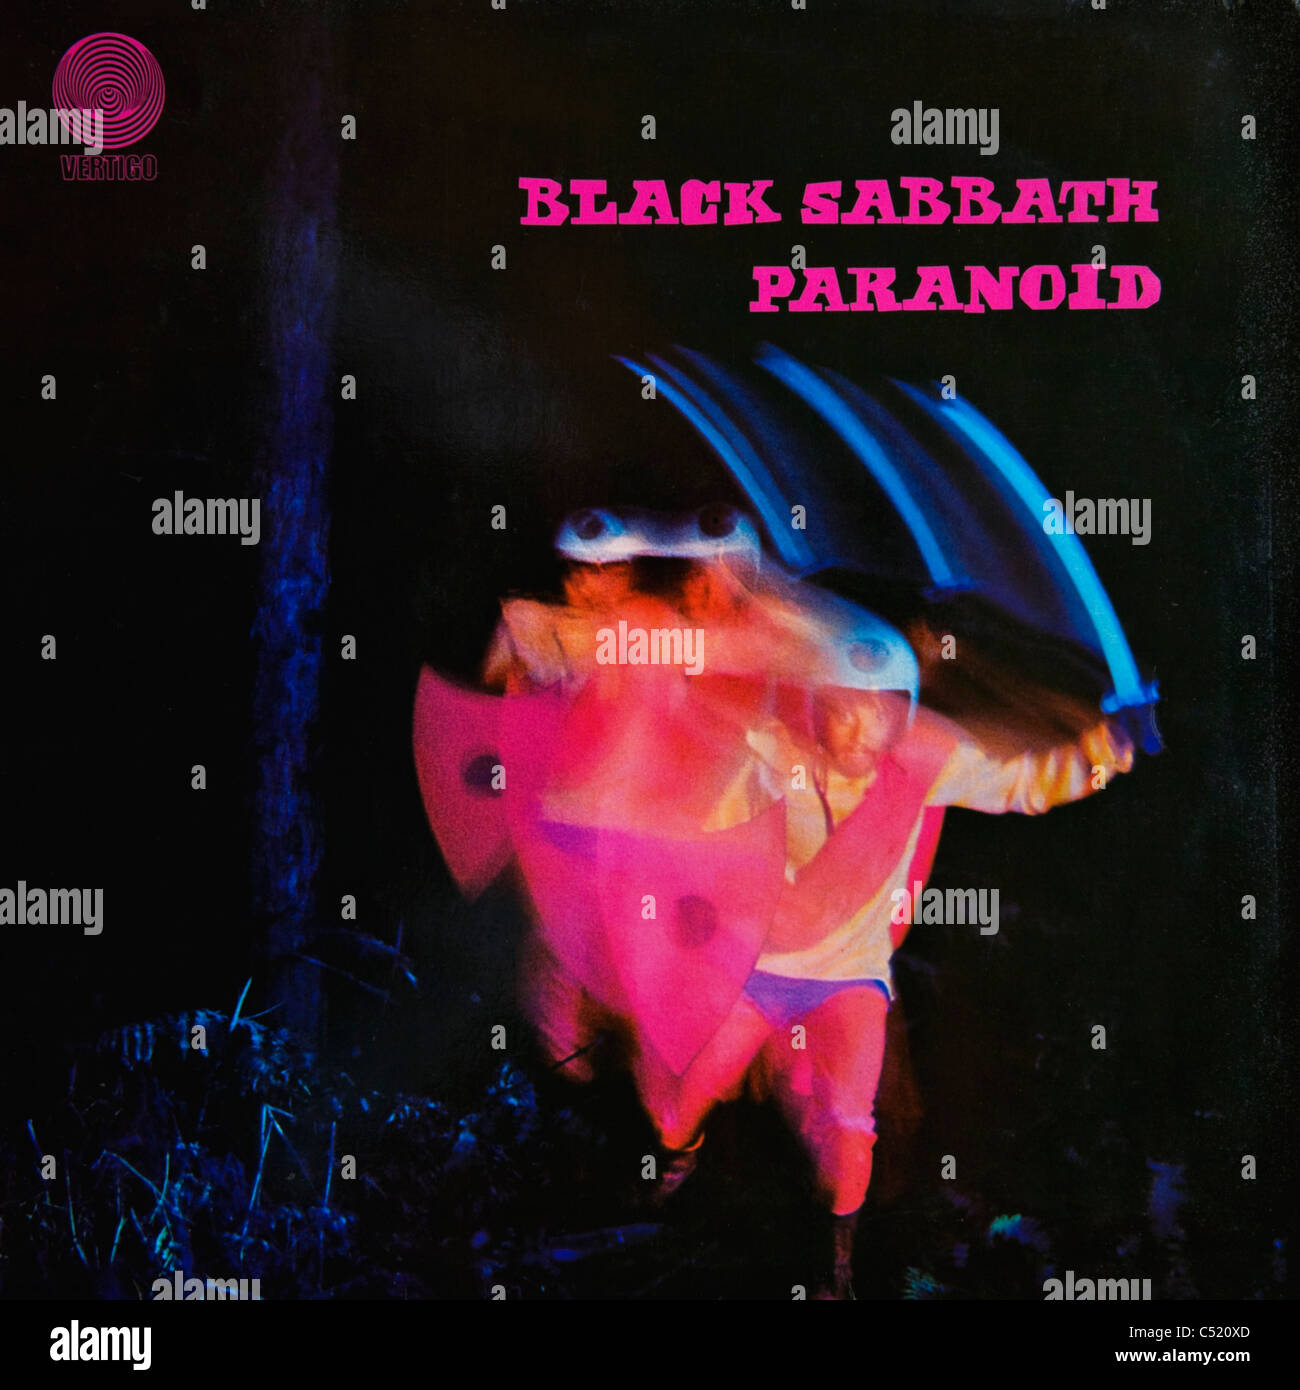 Cover of vinyl album Paranoid by Black Sabbath released 1970 on 